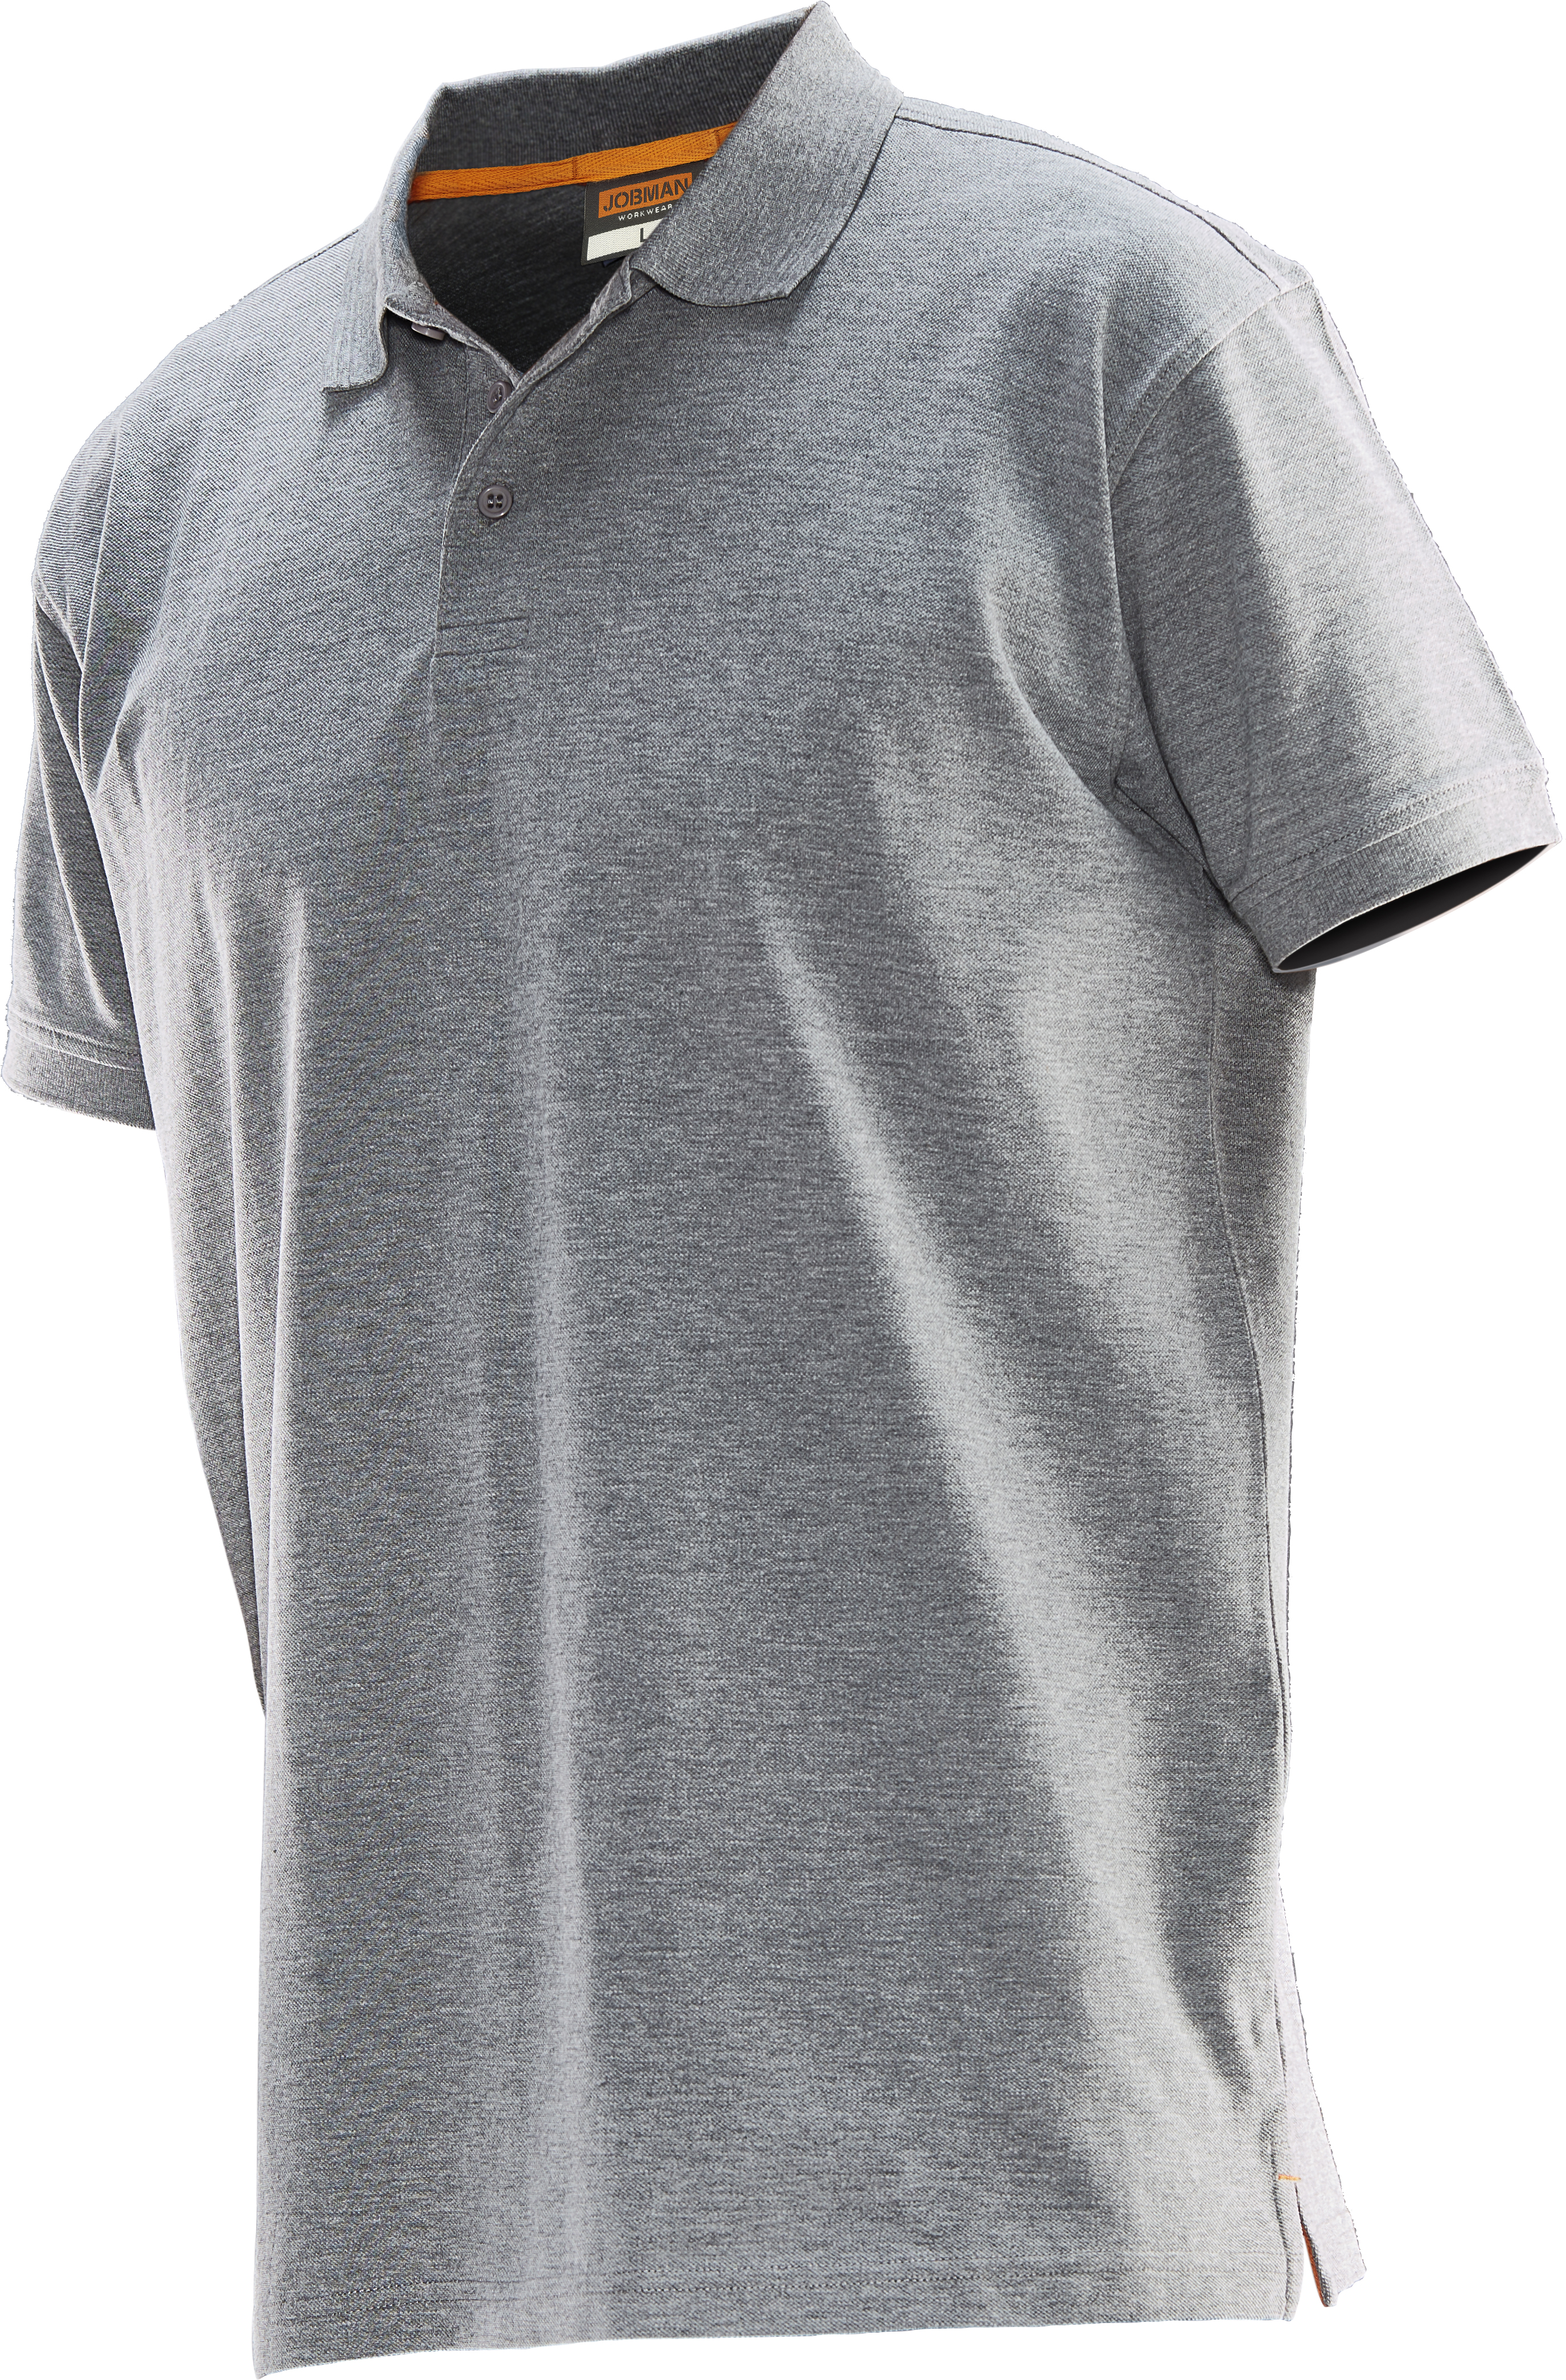 5564 T-shirt polo S gris chiné